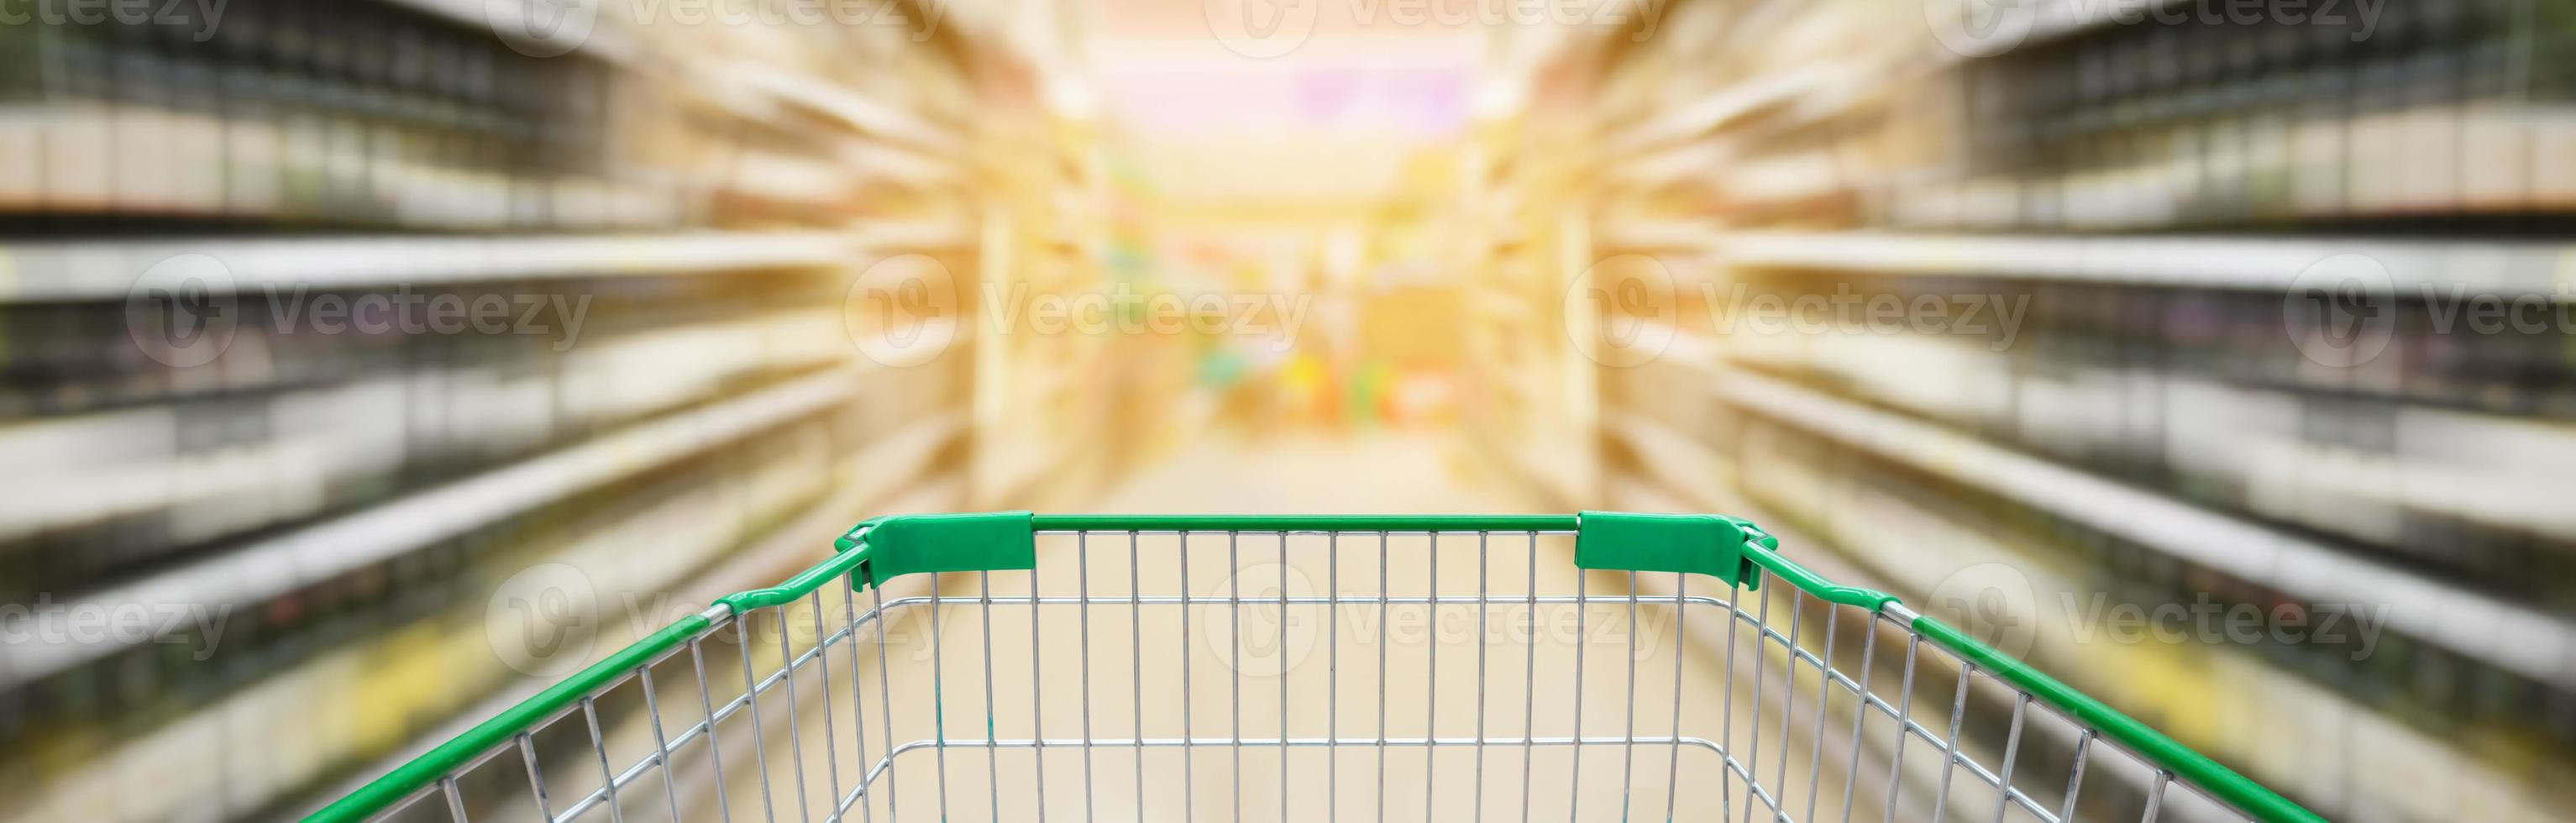 shopping cart with wine bottles shelves in supermarket aisle photo